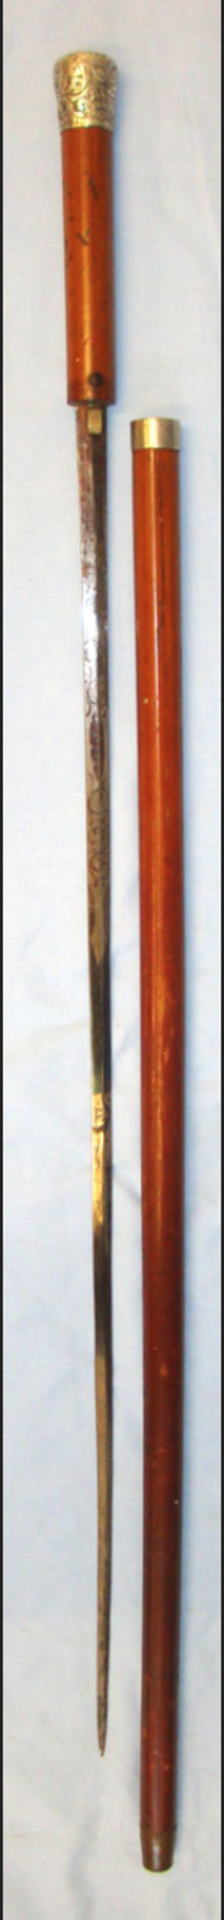 Victorian/ Edwardian Gentleman's Mallaca Sword Stick, Blade With Blued Panels - Image 2 of 3